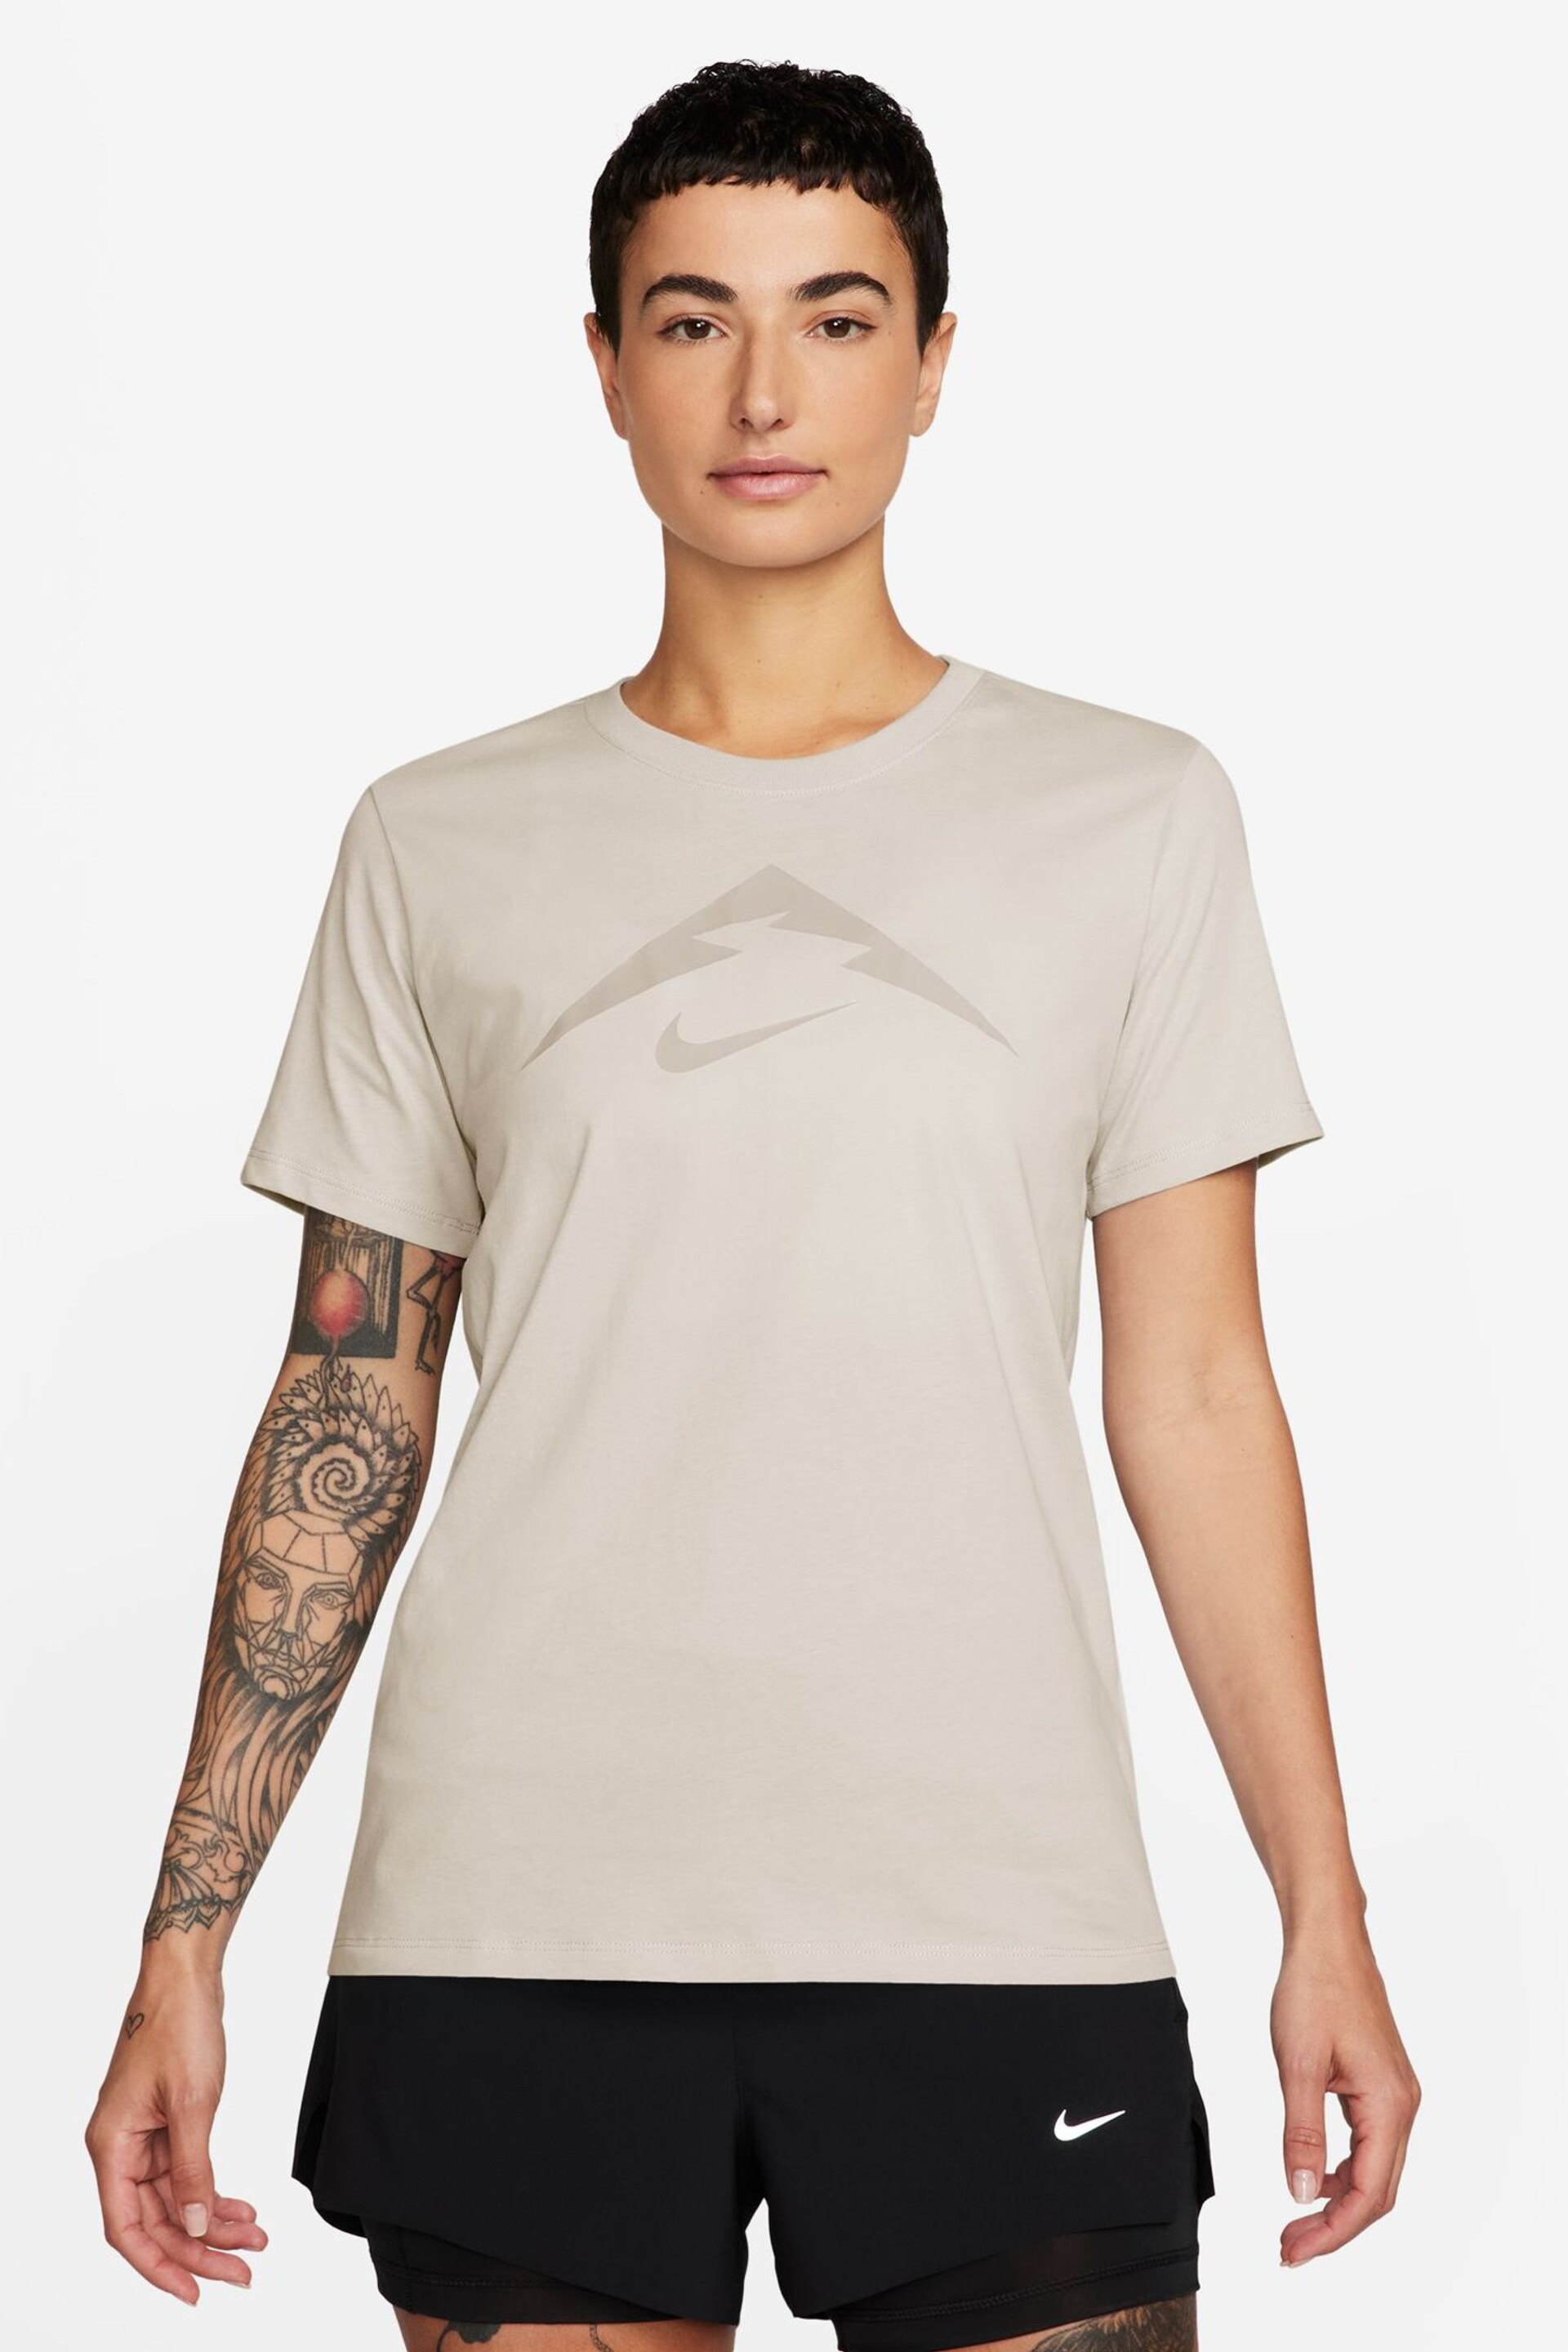 Nike White Trail T-Shirt - Image 1 of 3